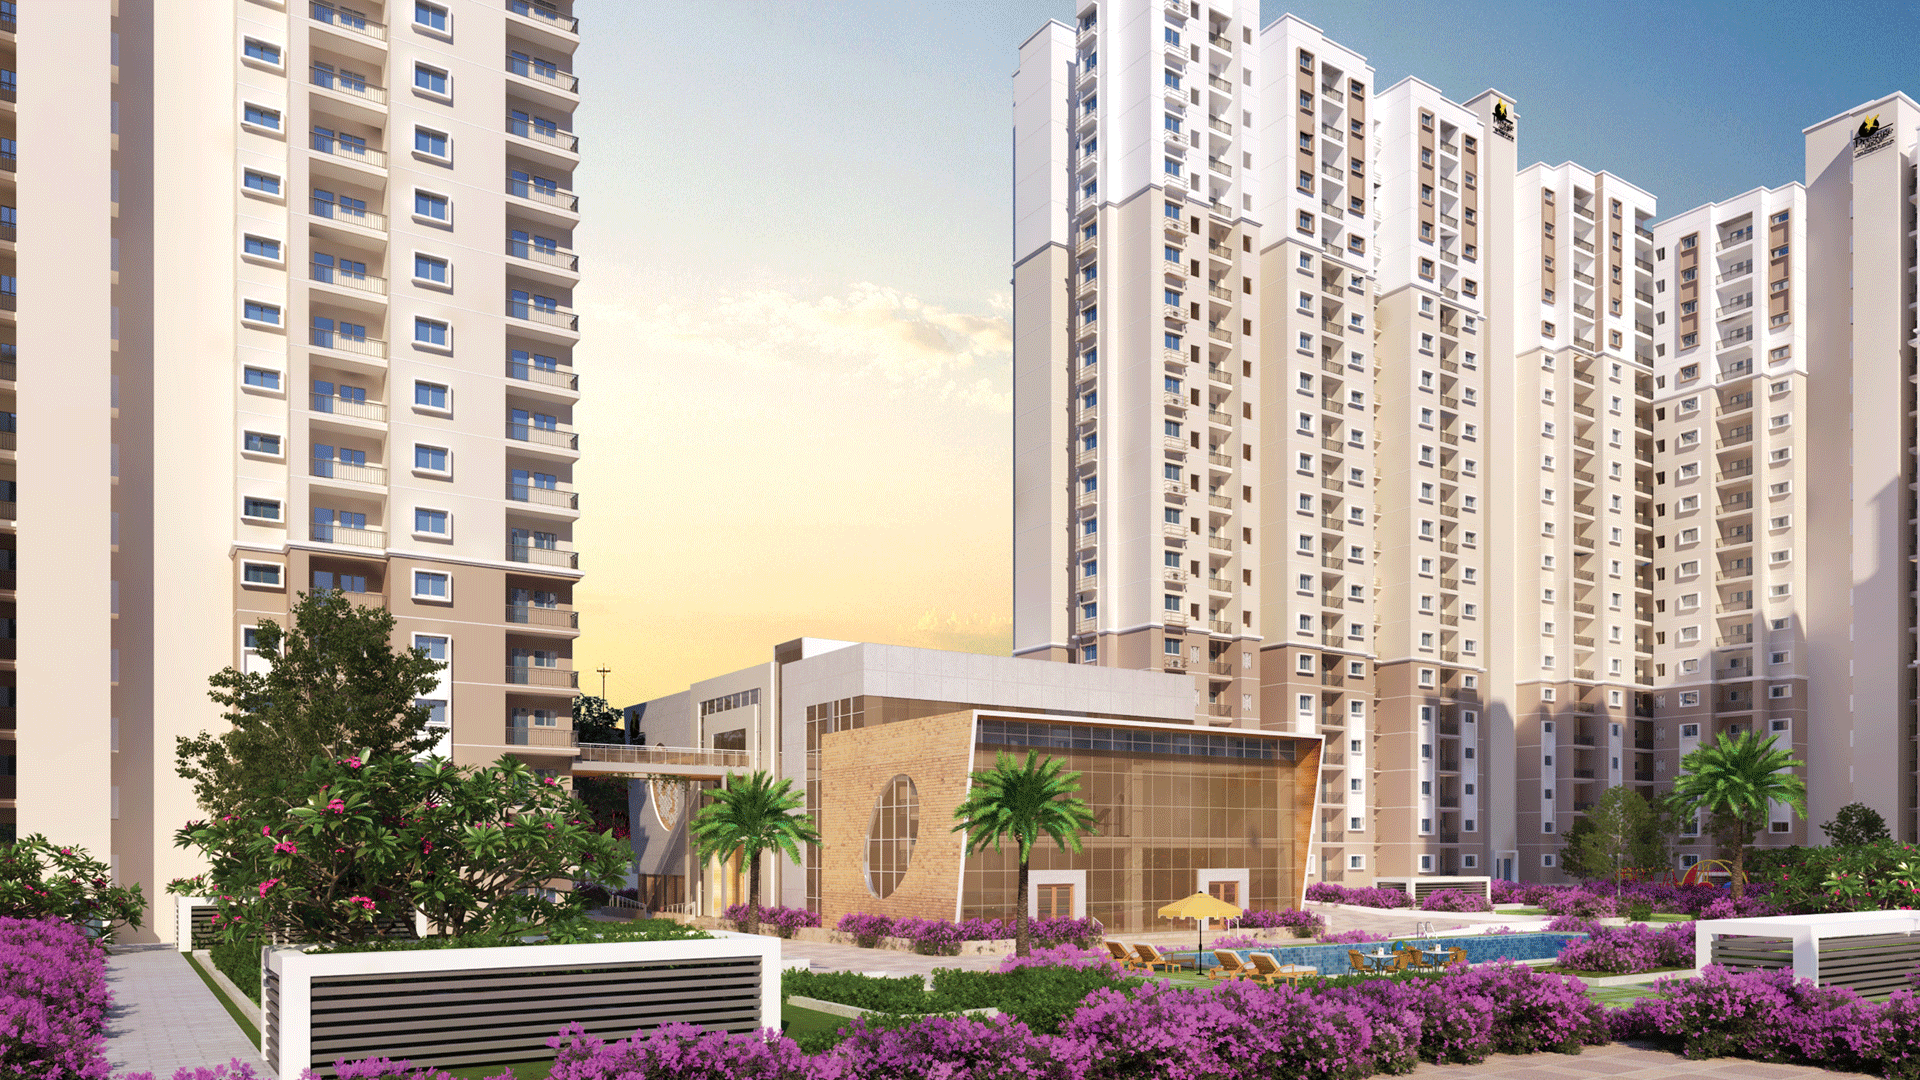 Prestige Avalon Park Apartment for sale in Sarjapur Road